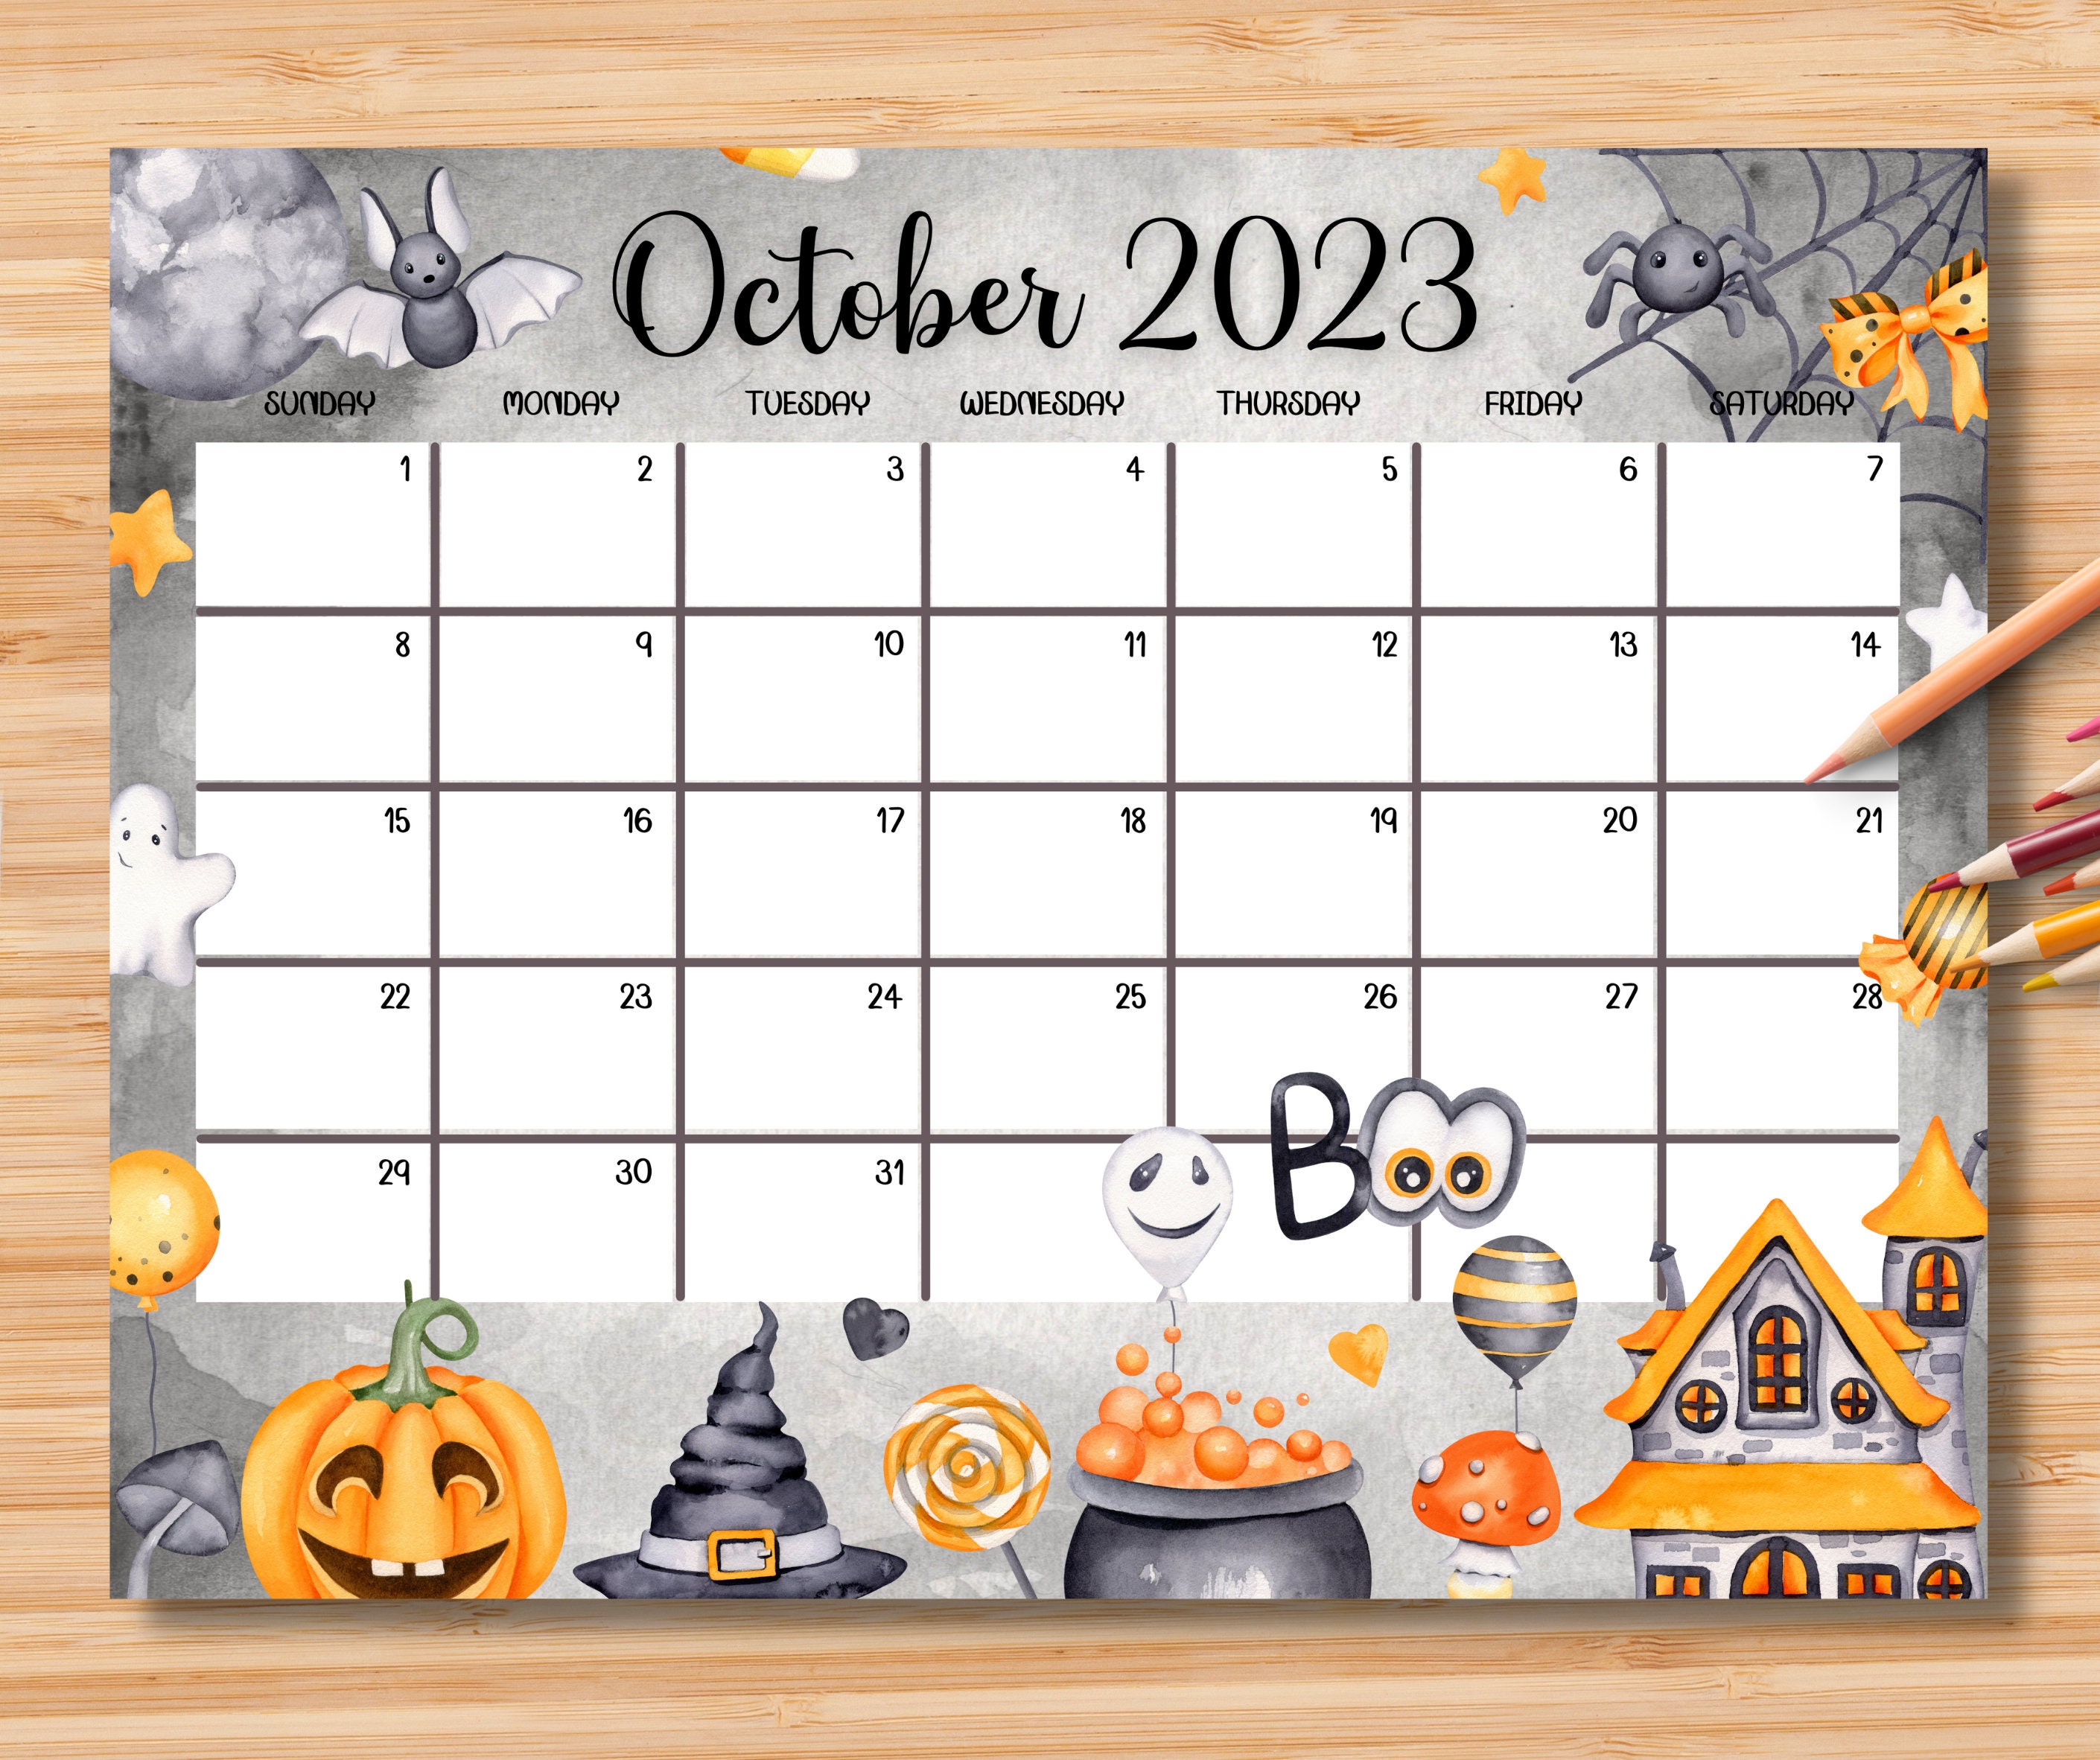 october-2023-calendar-spooky-get-latest-map-update